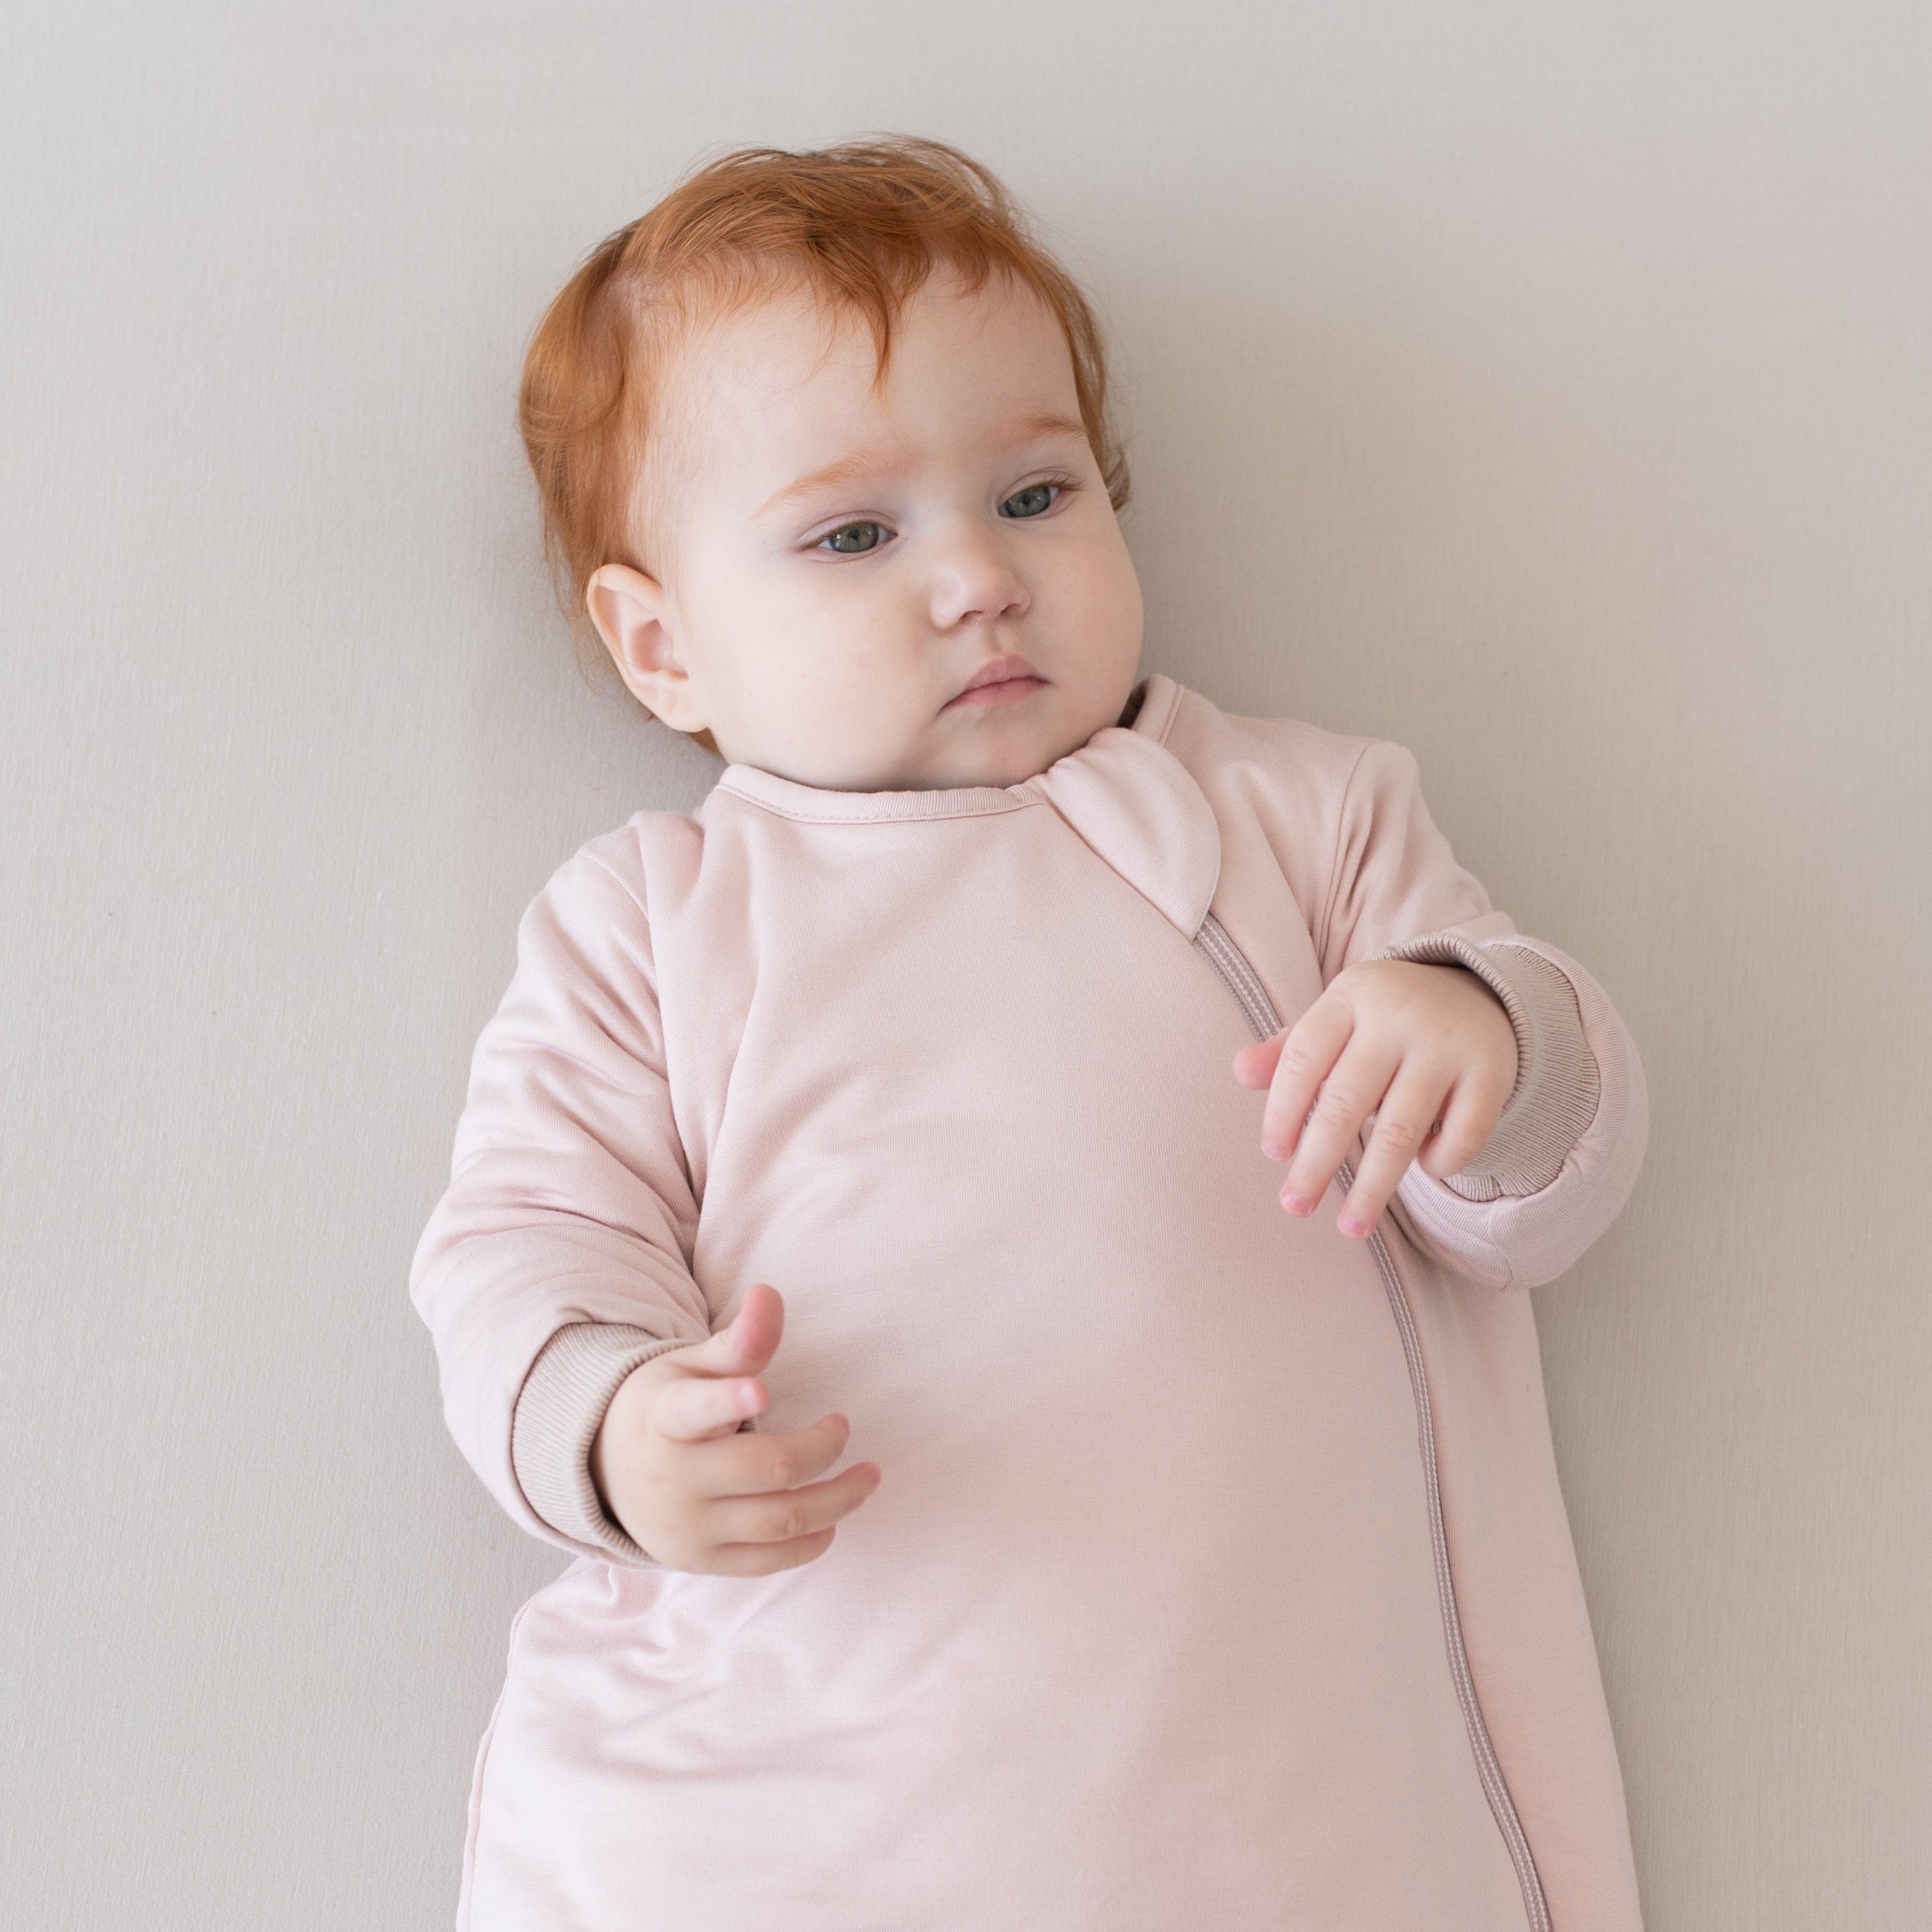 Baby in wearable blanket Kyte Baby Slumber Bag in Blush pink